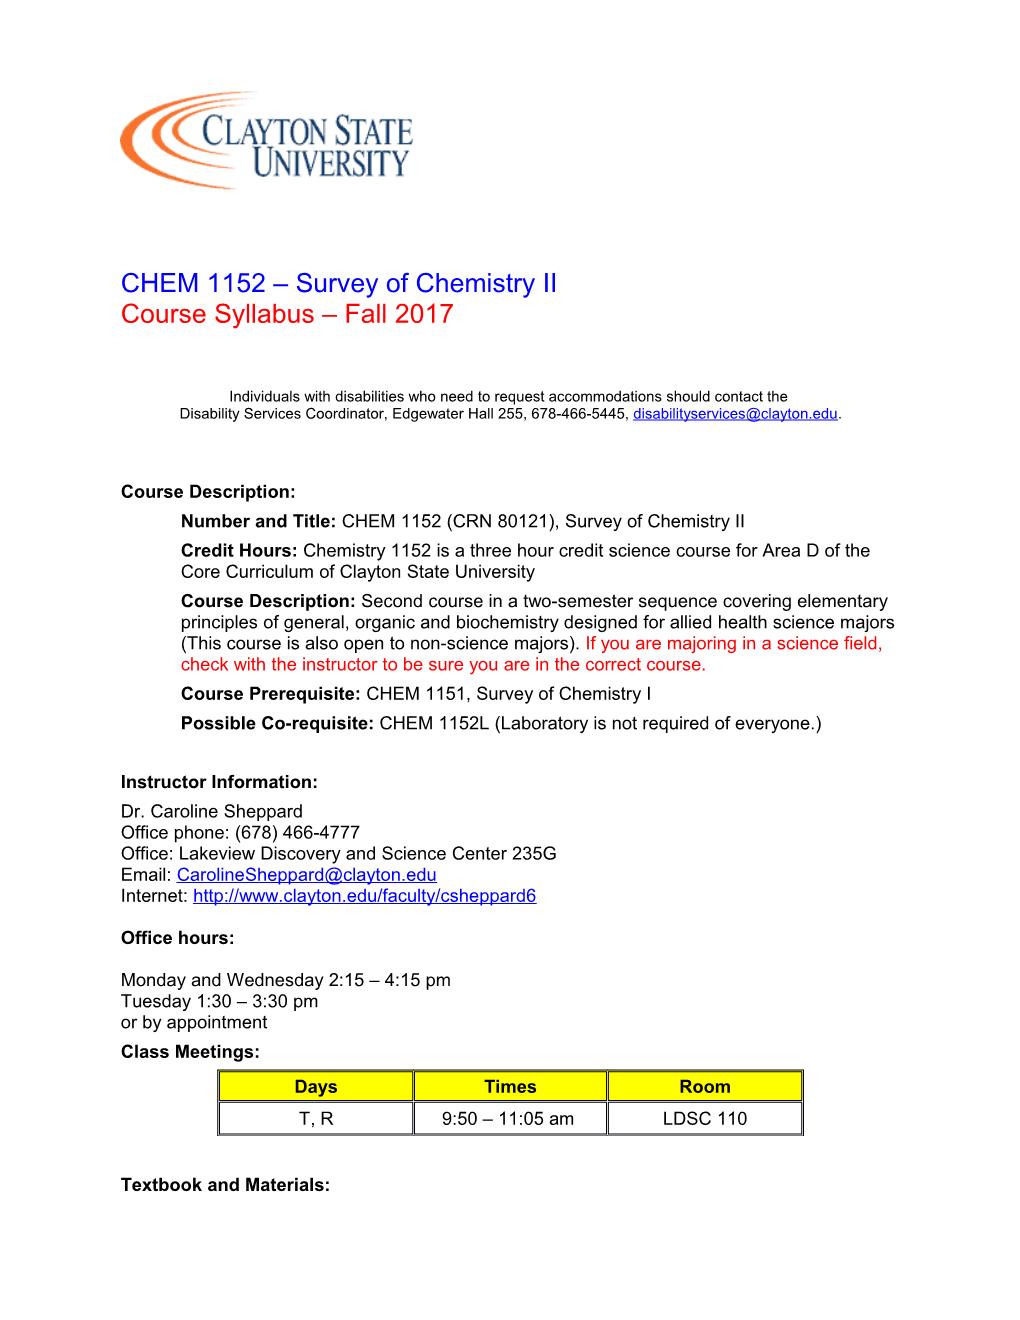 CHEM 1152 Survey of Chemistry II Course Syllabus Fall 2017